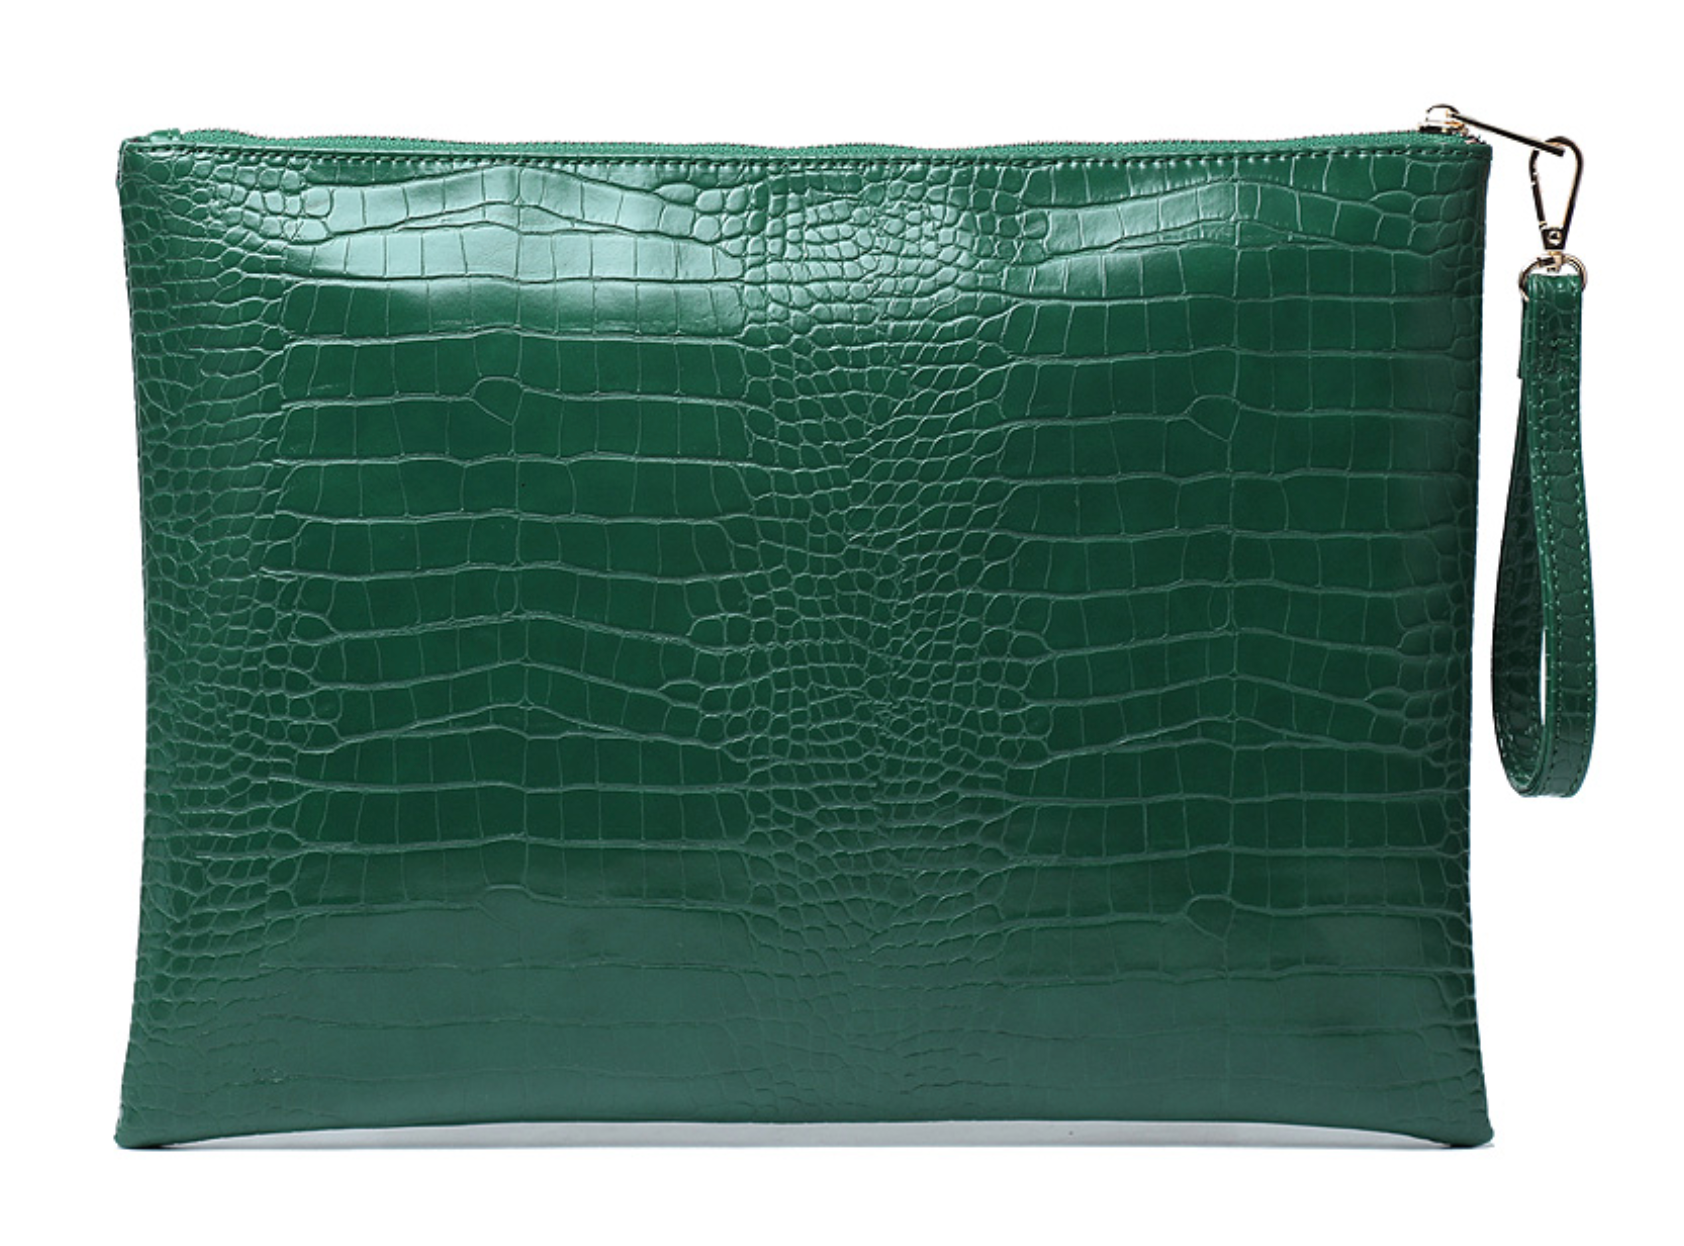 Green Crocodile Laptop Bag